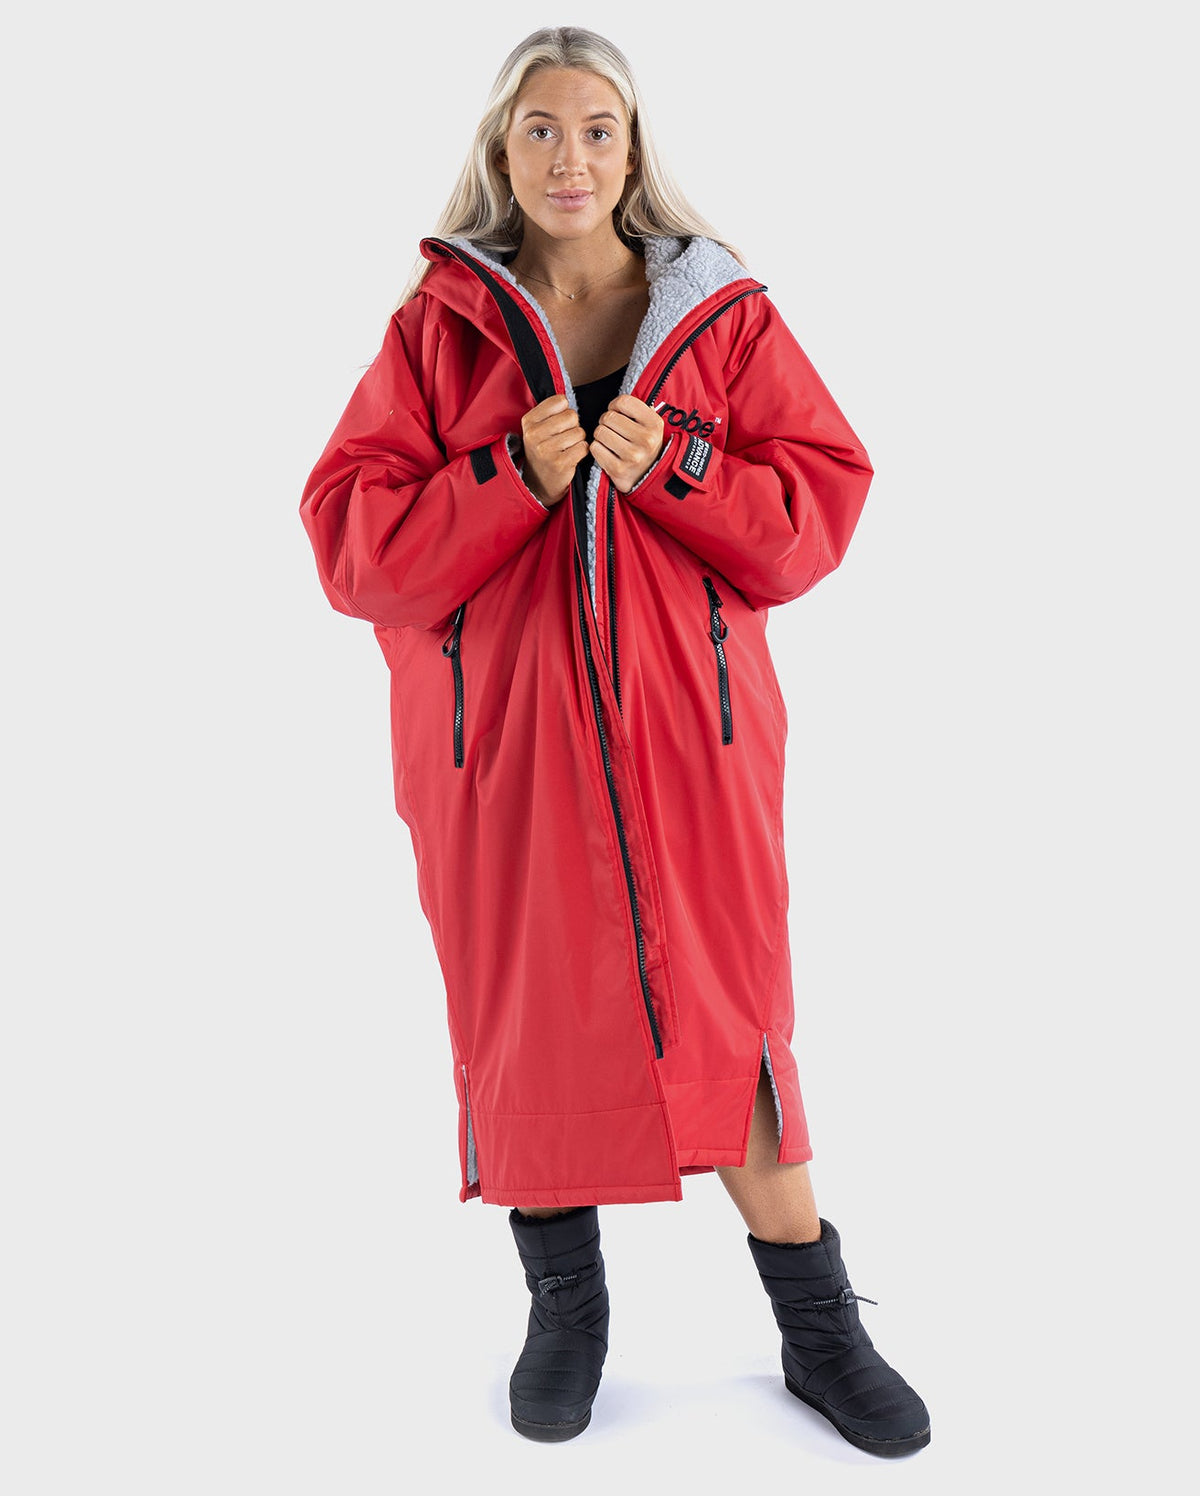 1|Woman wearing Red Grey dryrobe® Advance Long Sleeve